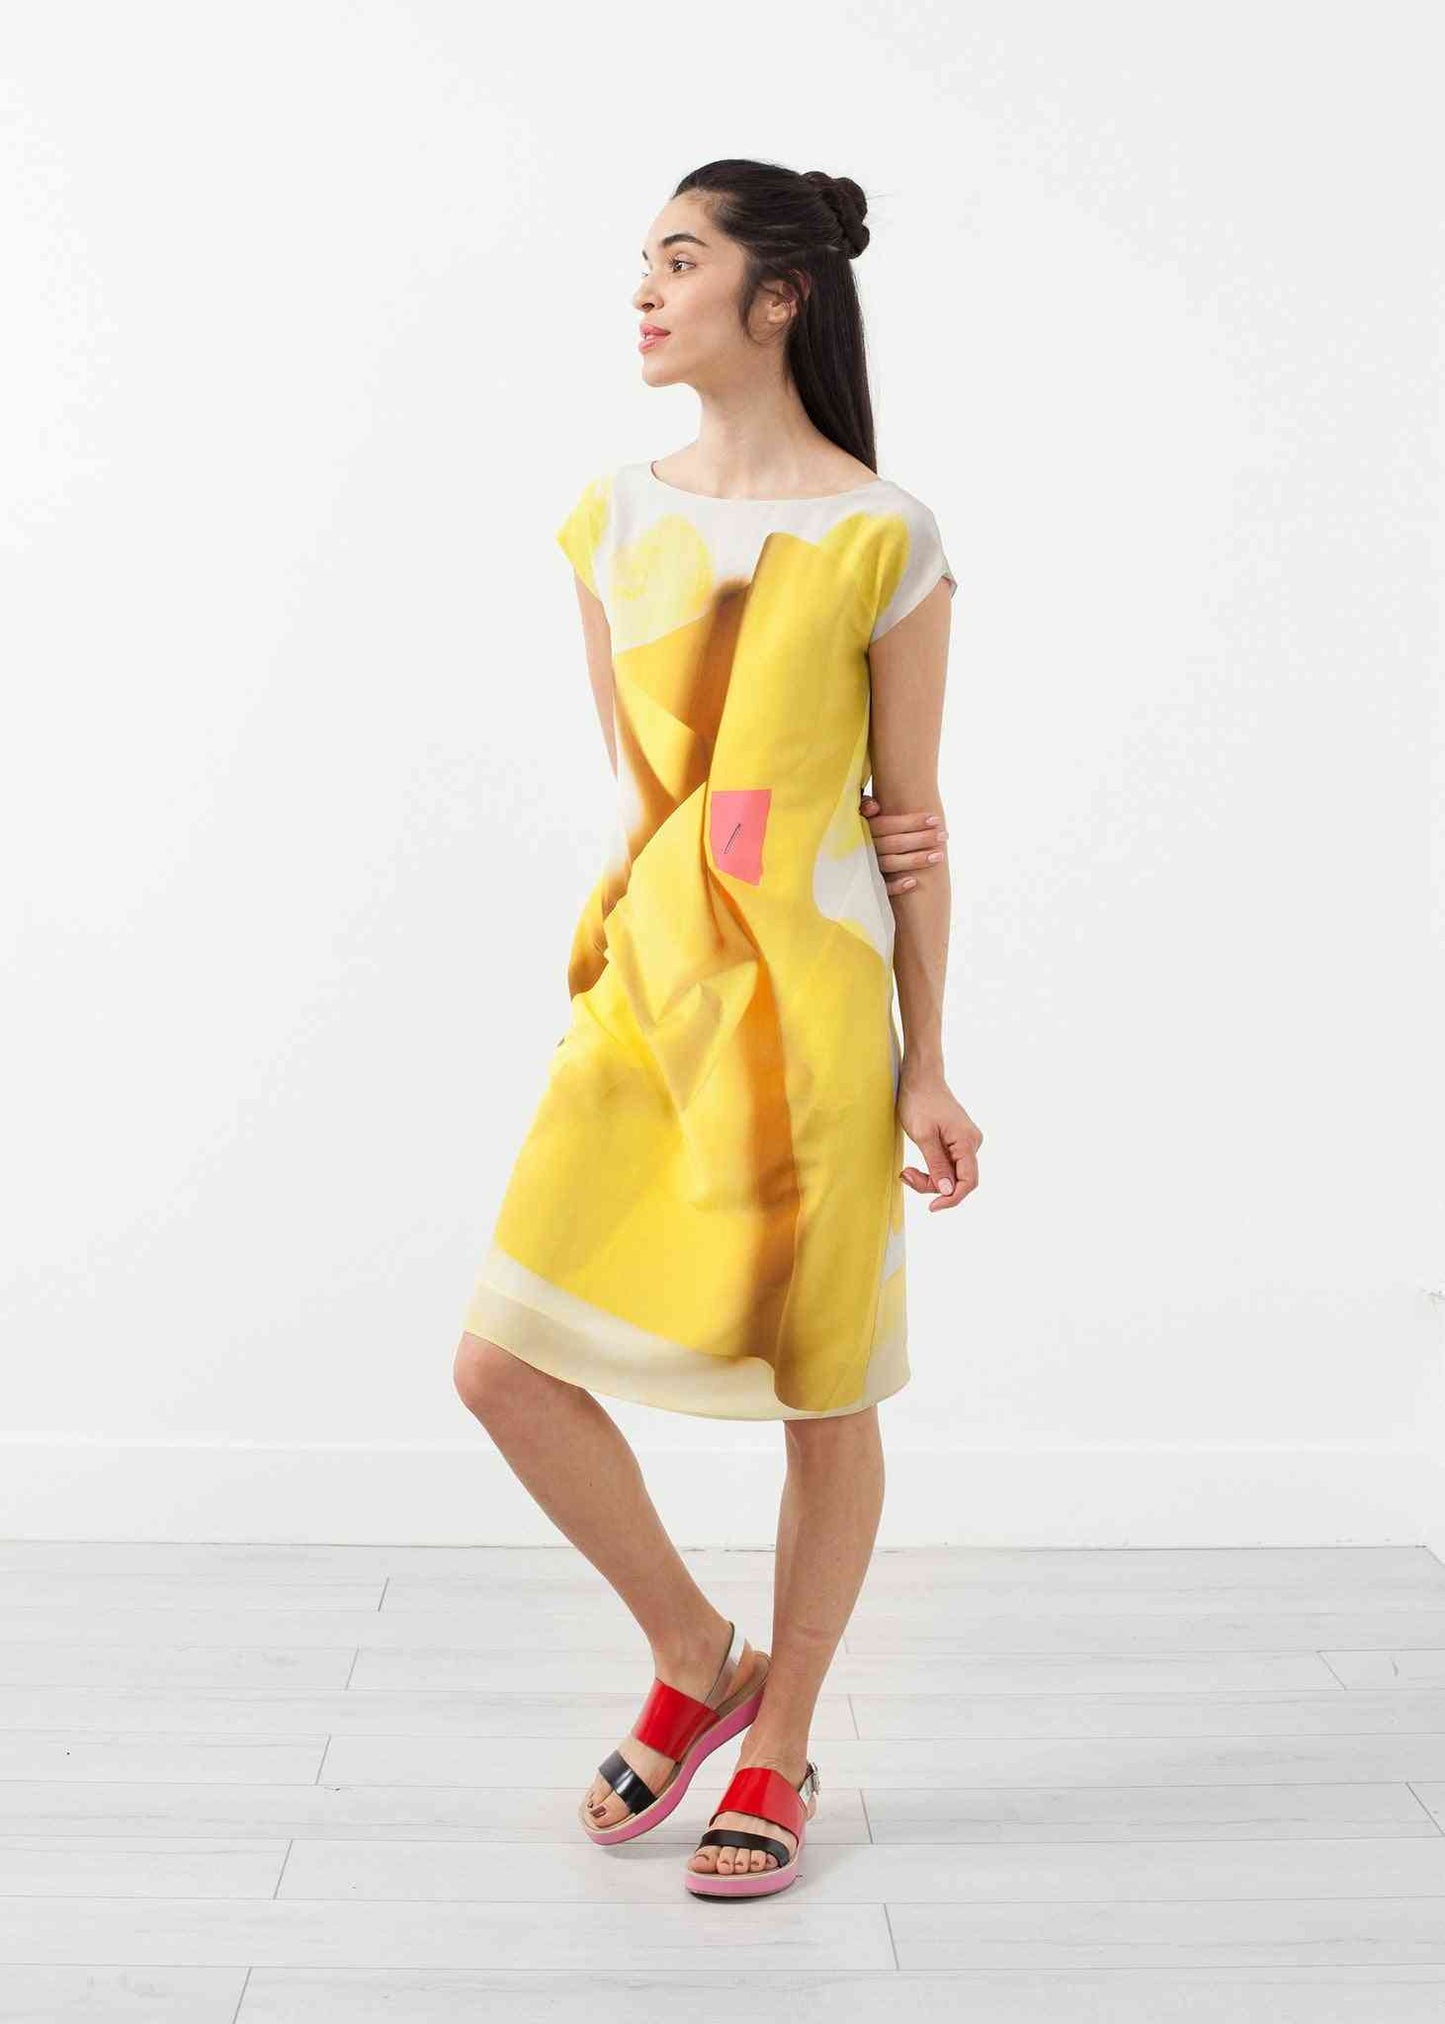 Paper Dress Antoni & Alison women's dresses Yellow 8 7572880809